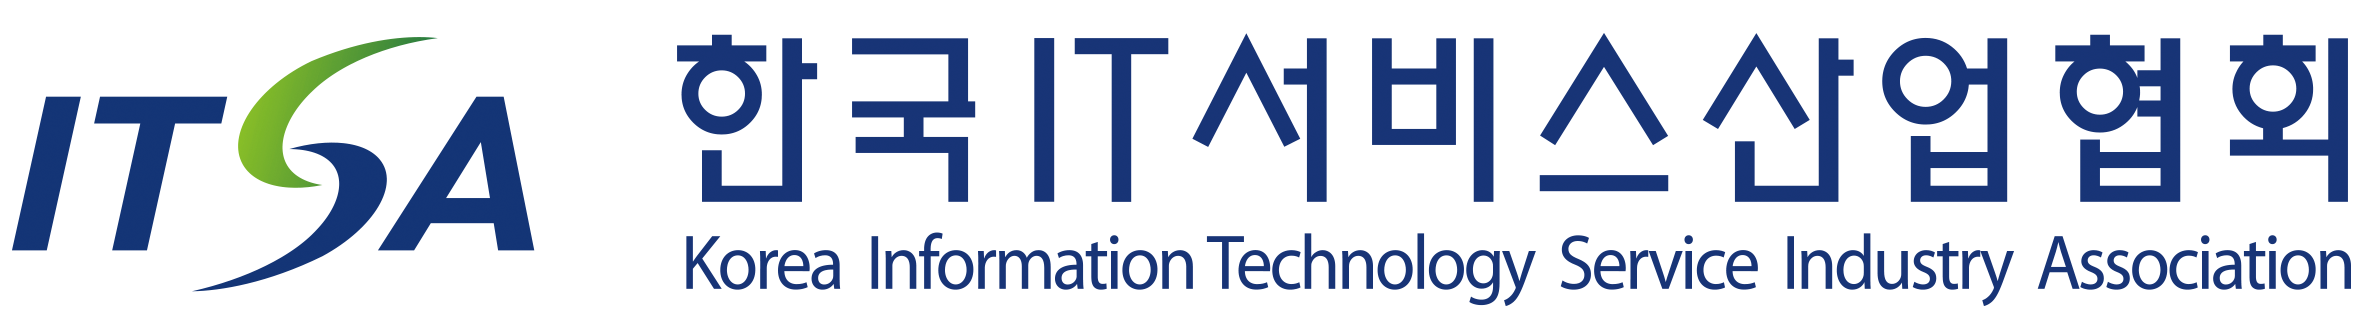 ITSA 로고(300dpi-RGB)